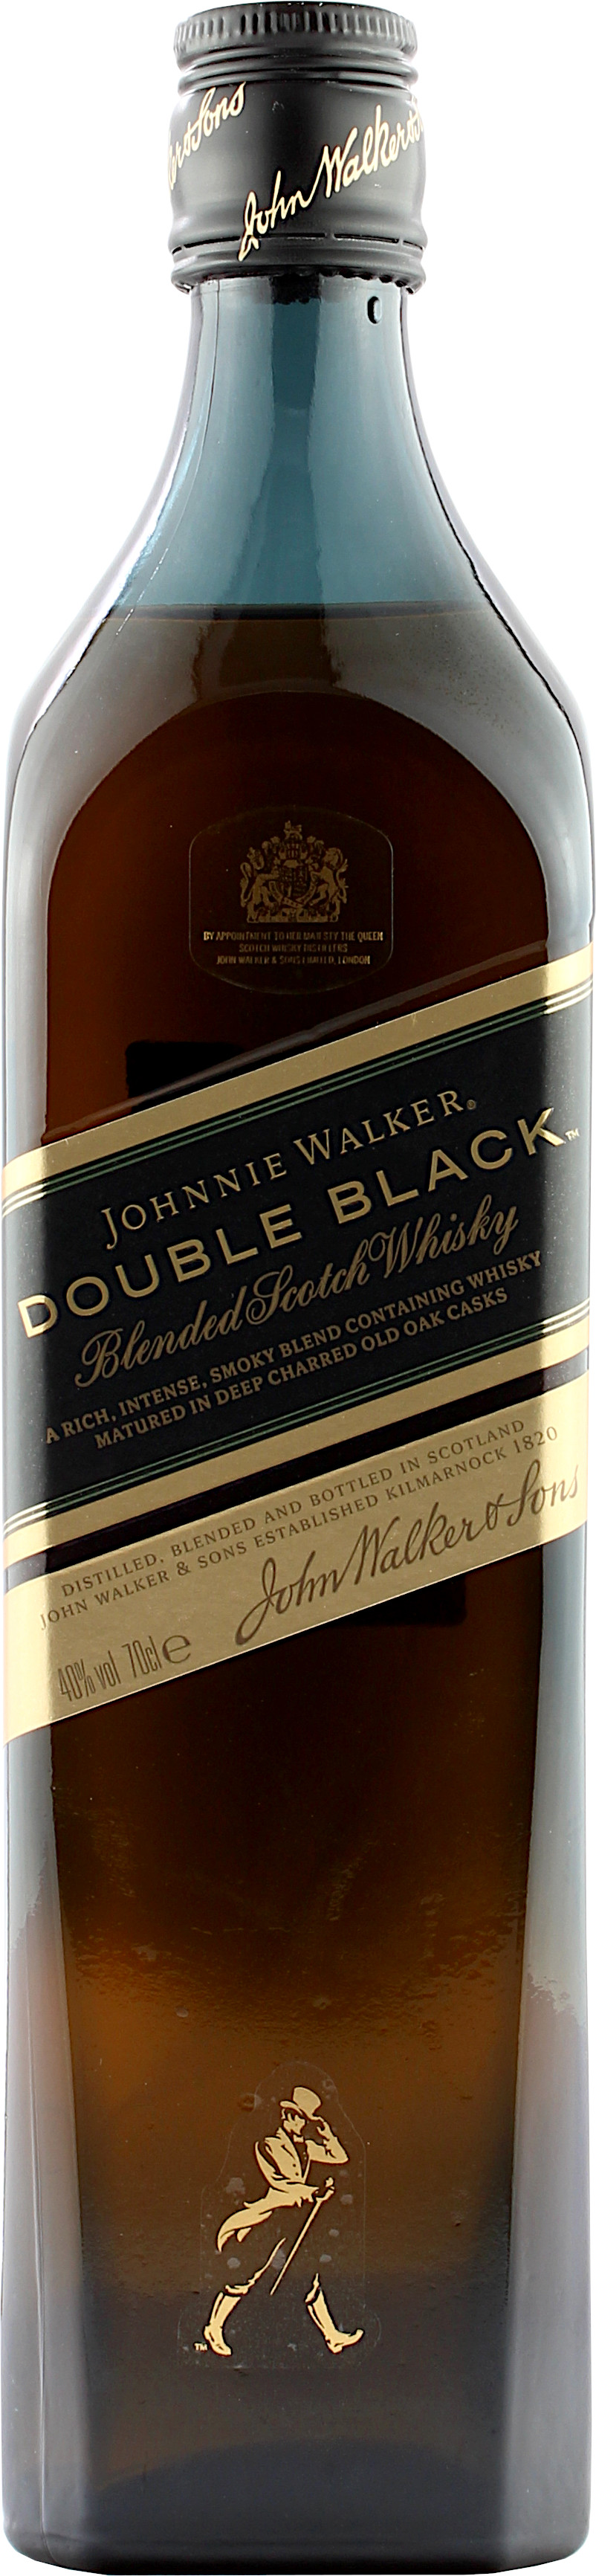 Johnnie Walker Double Black 40.0% 0,7l